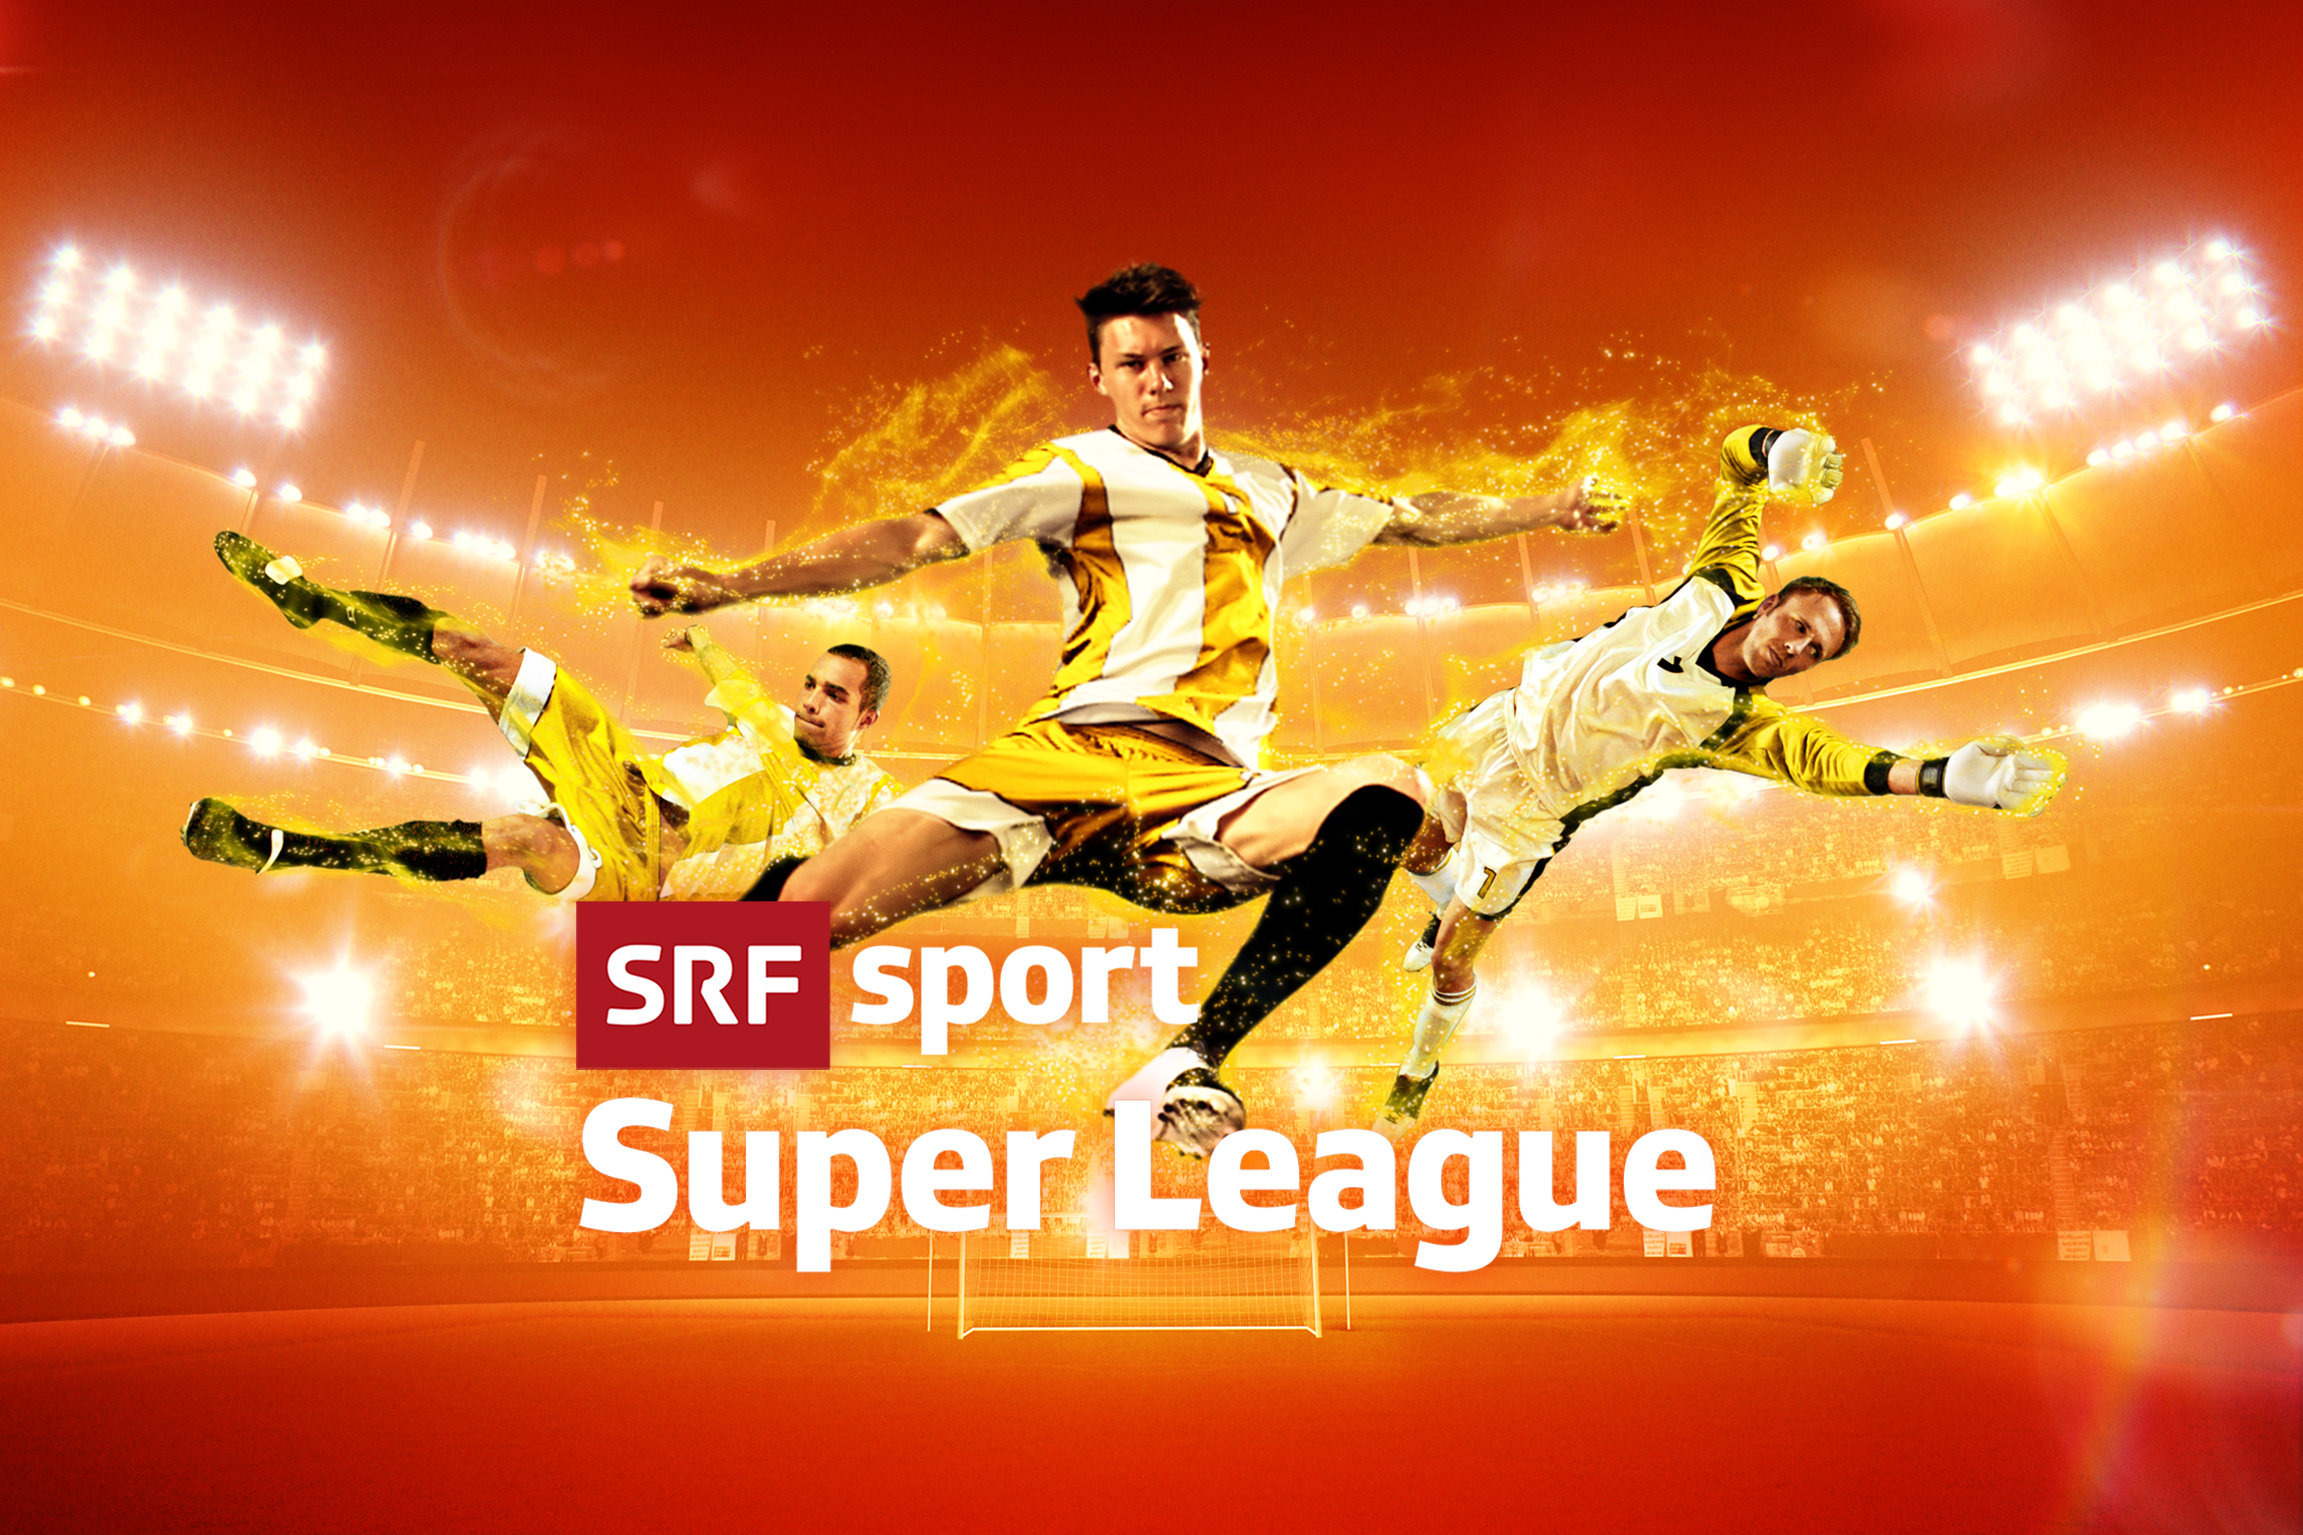 SRF zeigt die Super League neu am Samstagabend live - Medienportal